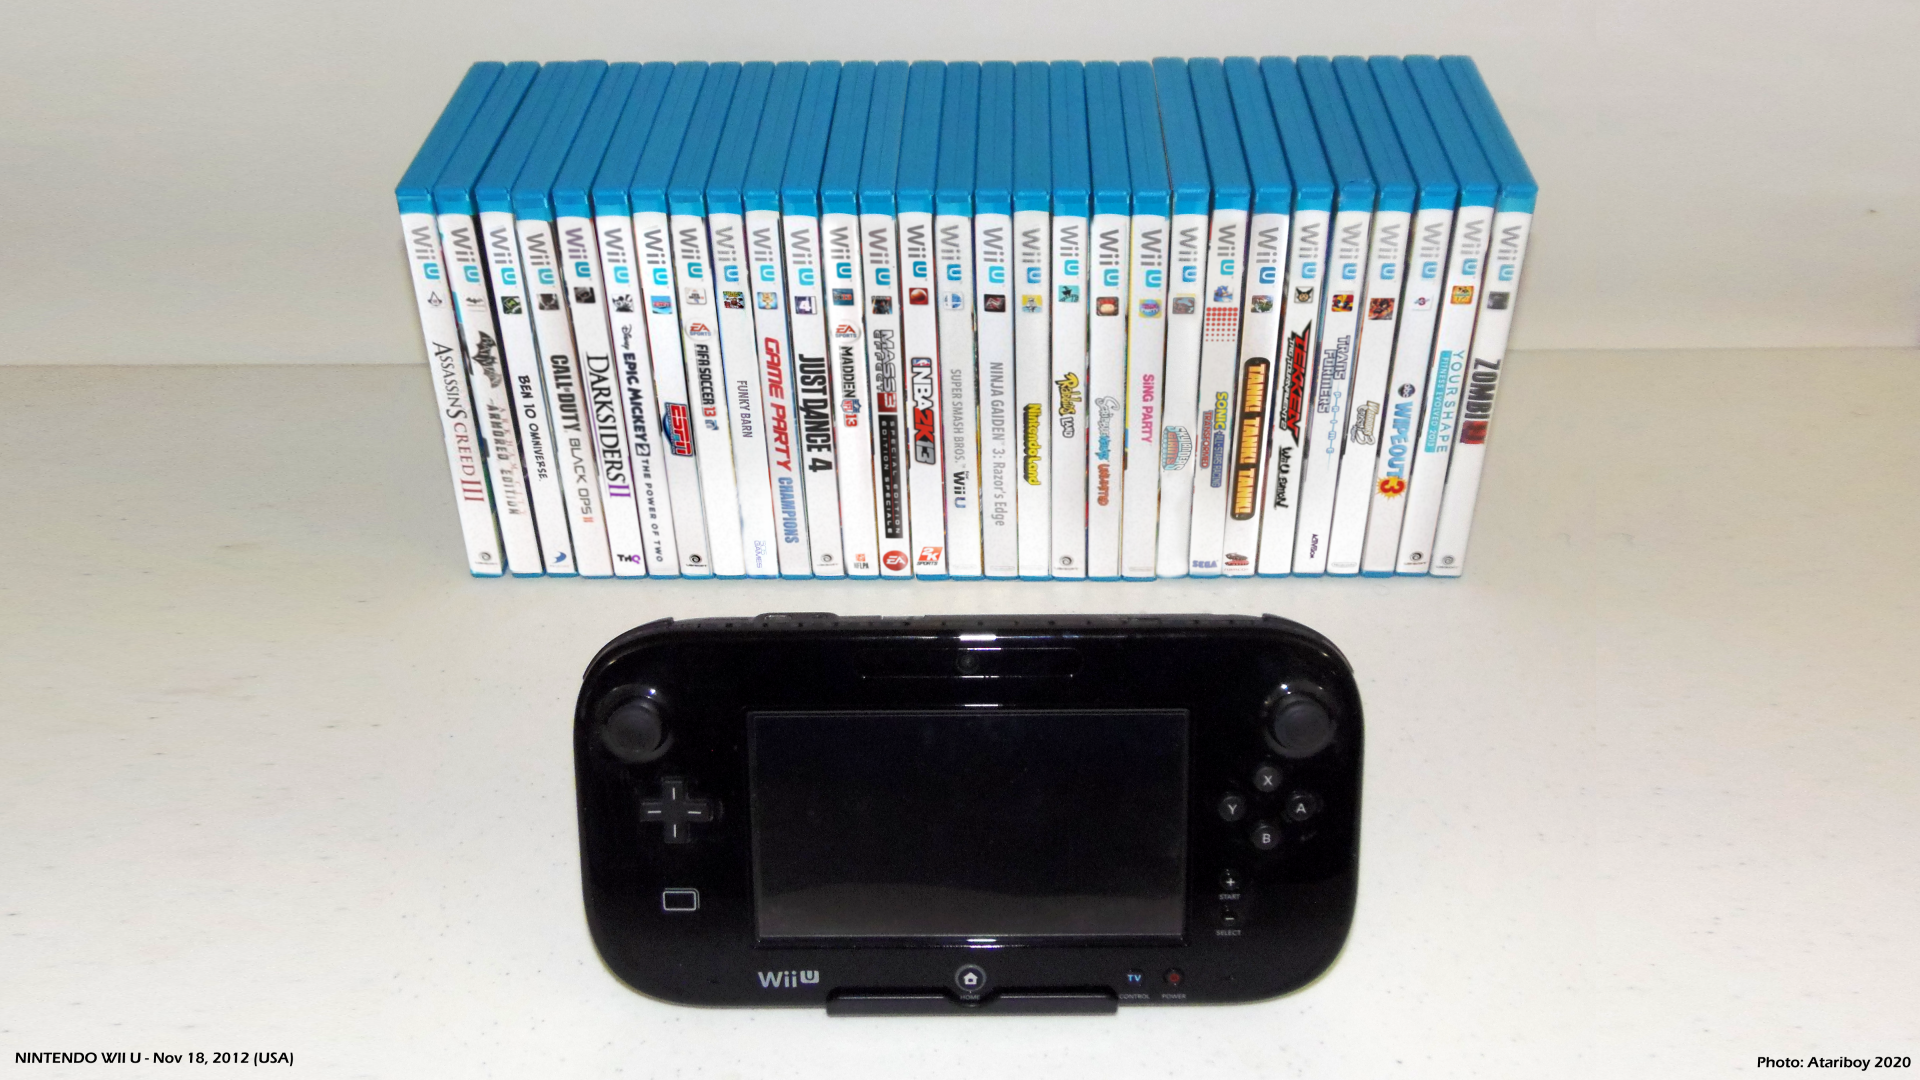 Ben 10 Omniverse: The Video Game - Nintendo Wii U